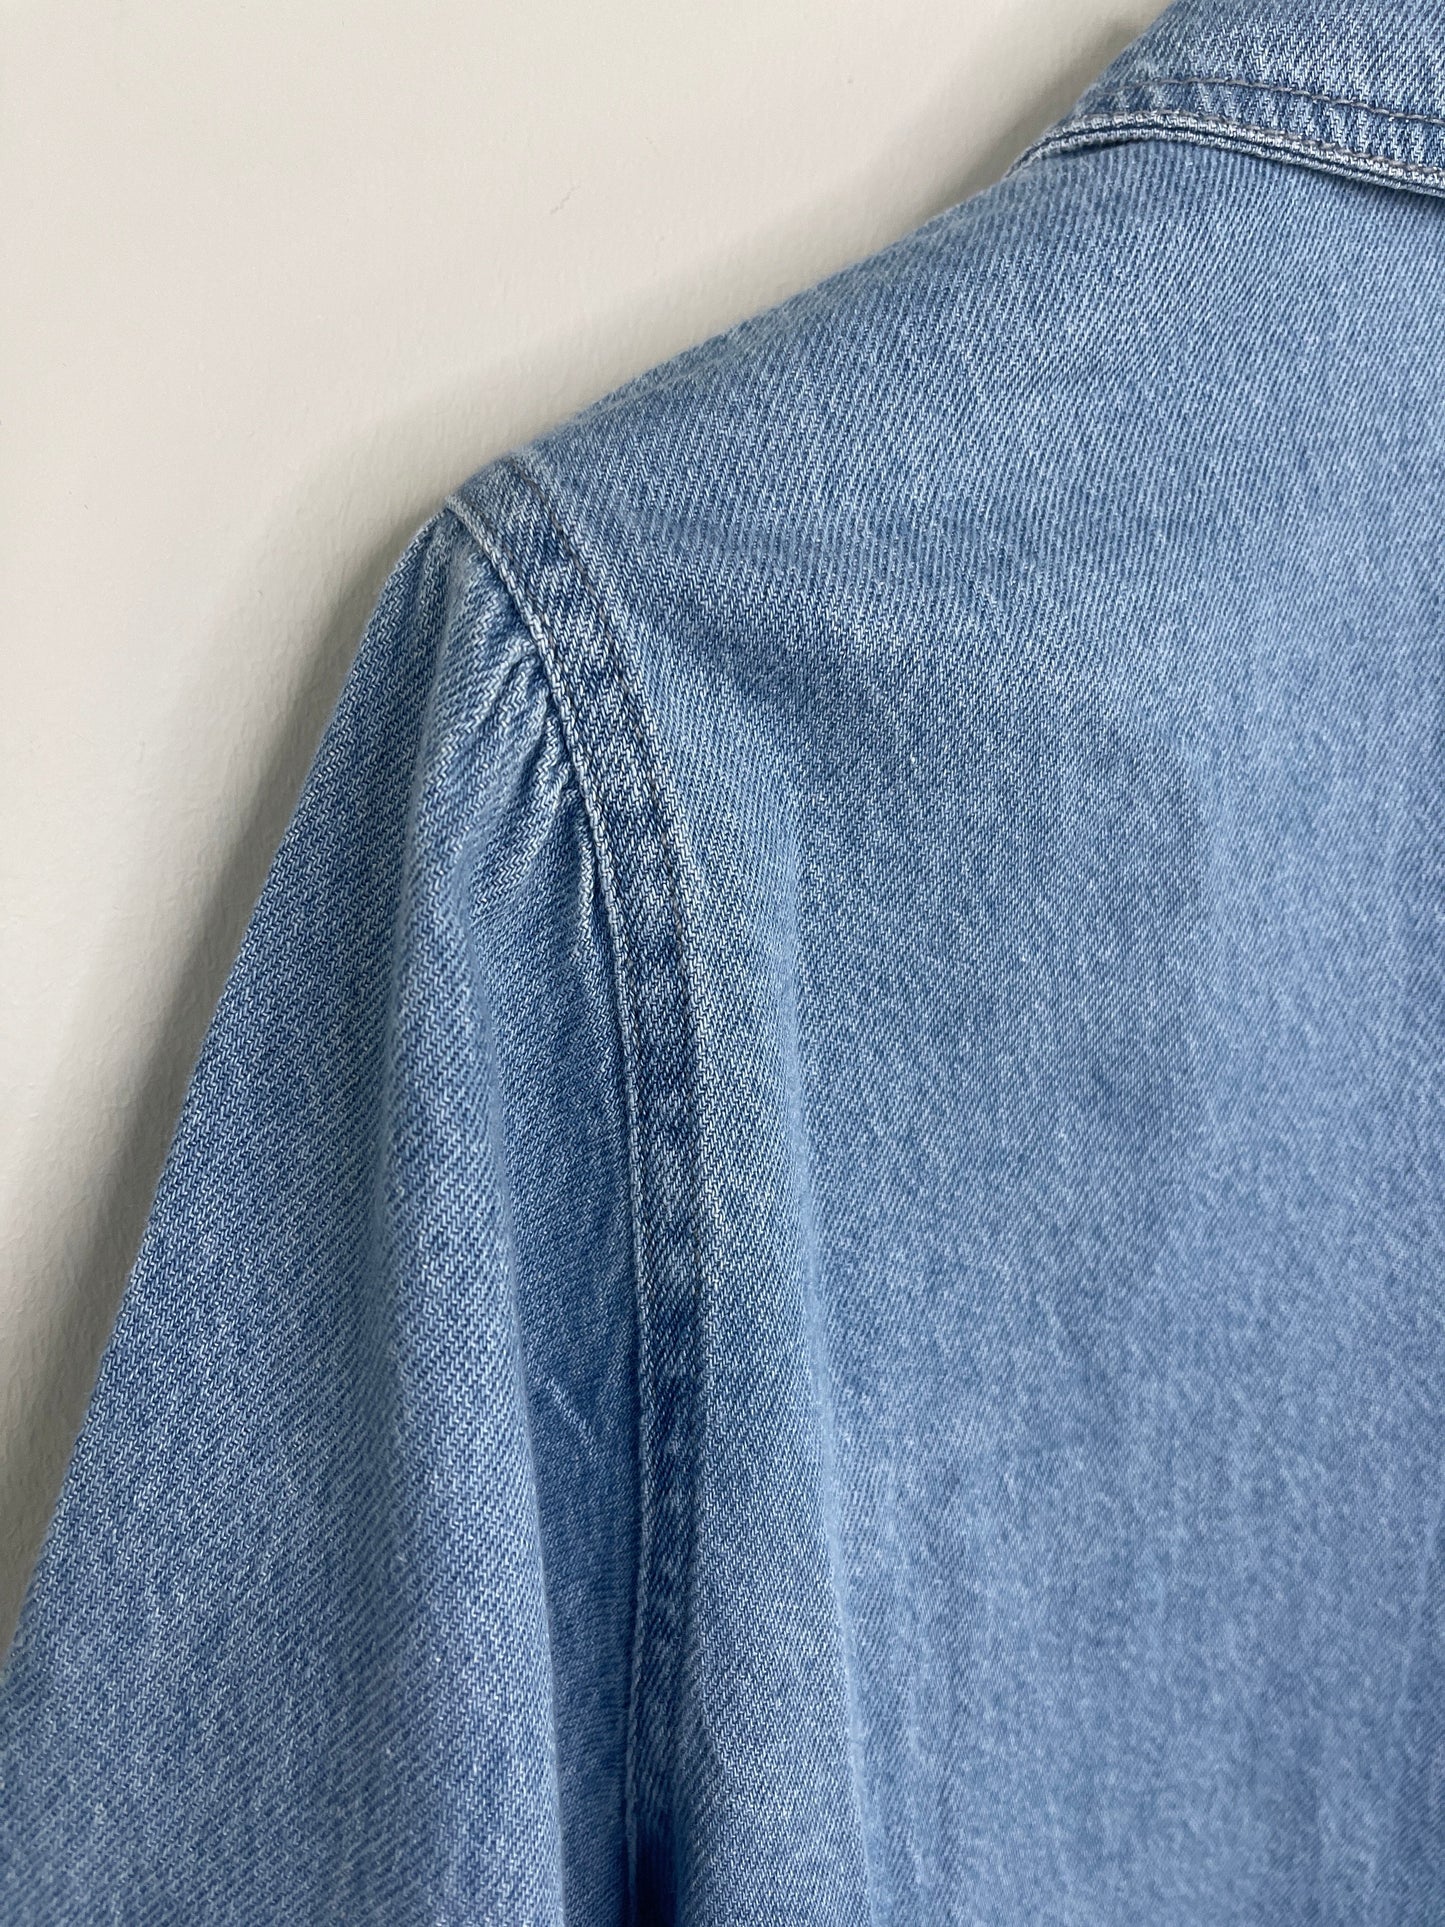 Shirt, Denim Shirred, Waterfall Pockets & Shoulder Line